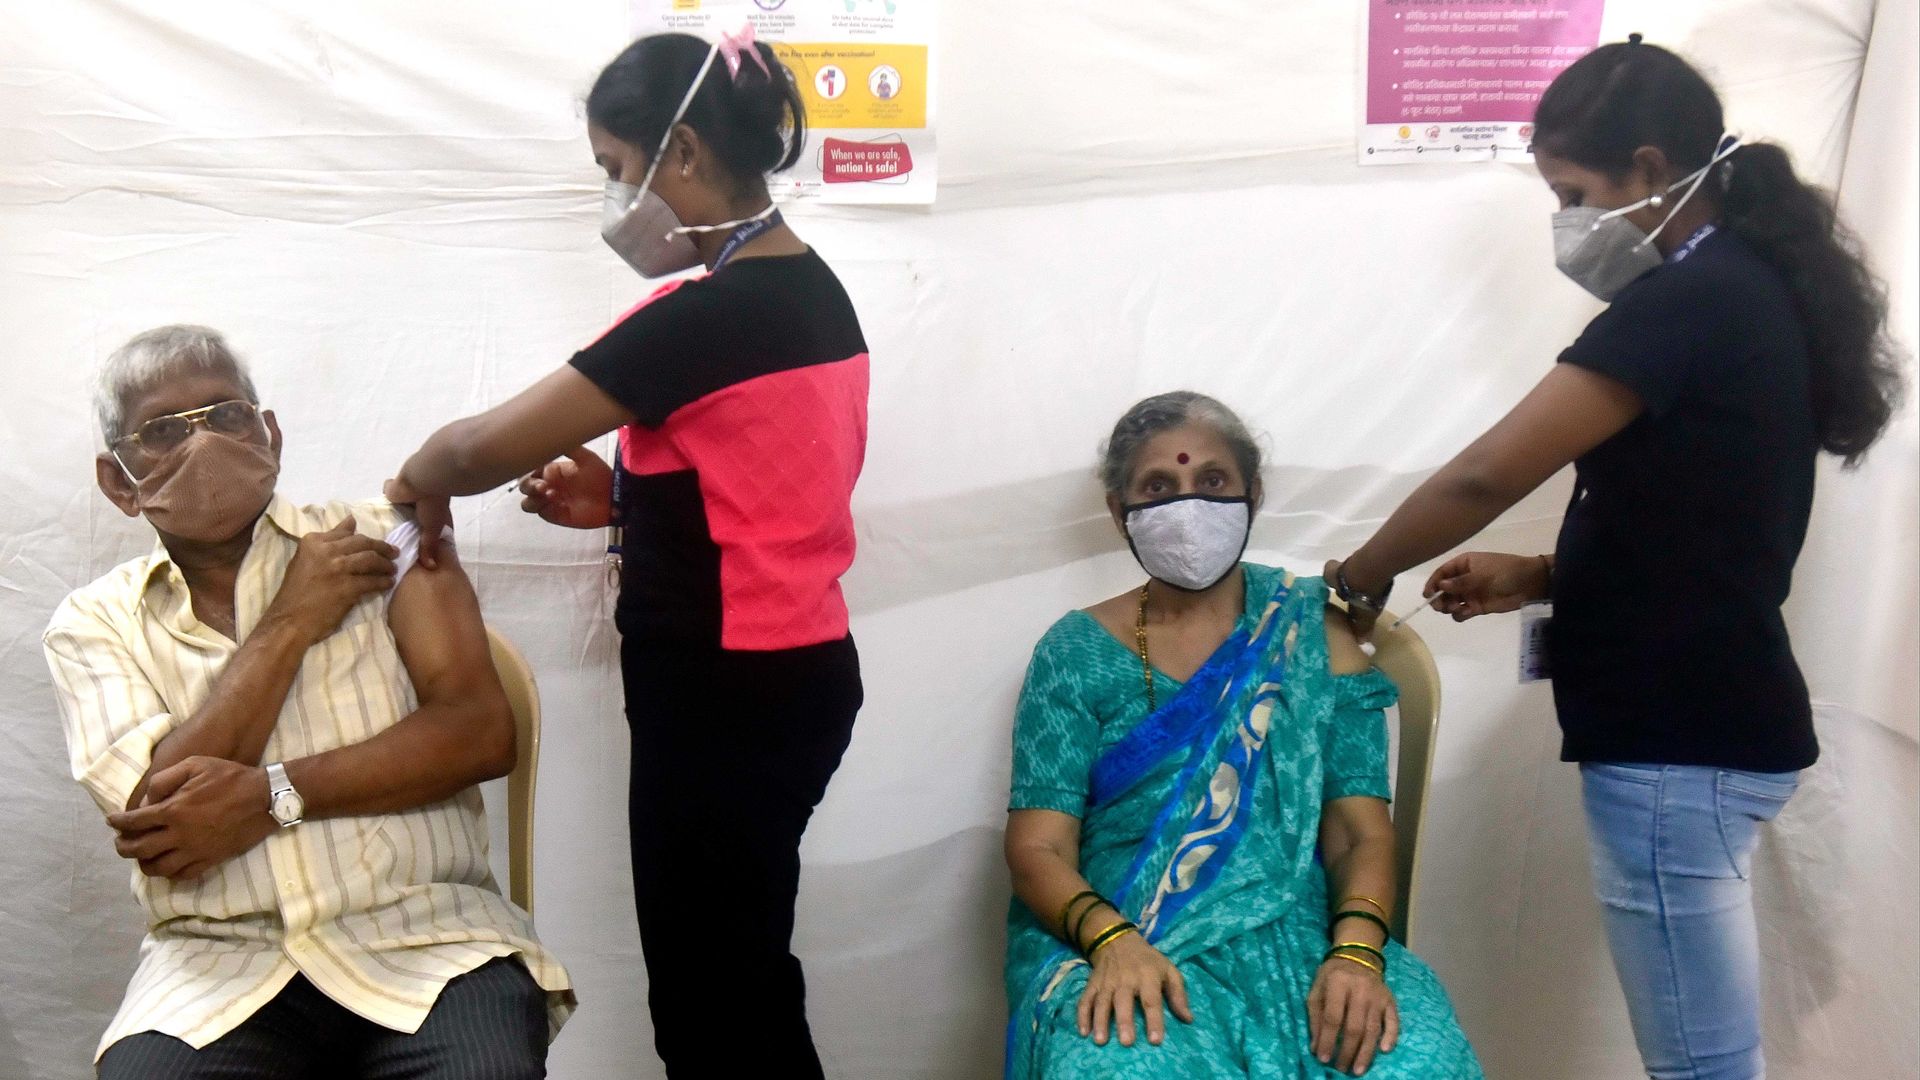 Beneficiaries receive COVID-19 vaccine during a vaccination drive at BPK Sahakari Vidya Mandir, on June 21, 2021 in Mumbai, India.